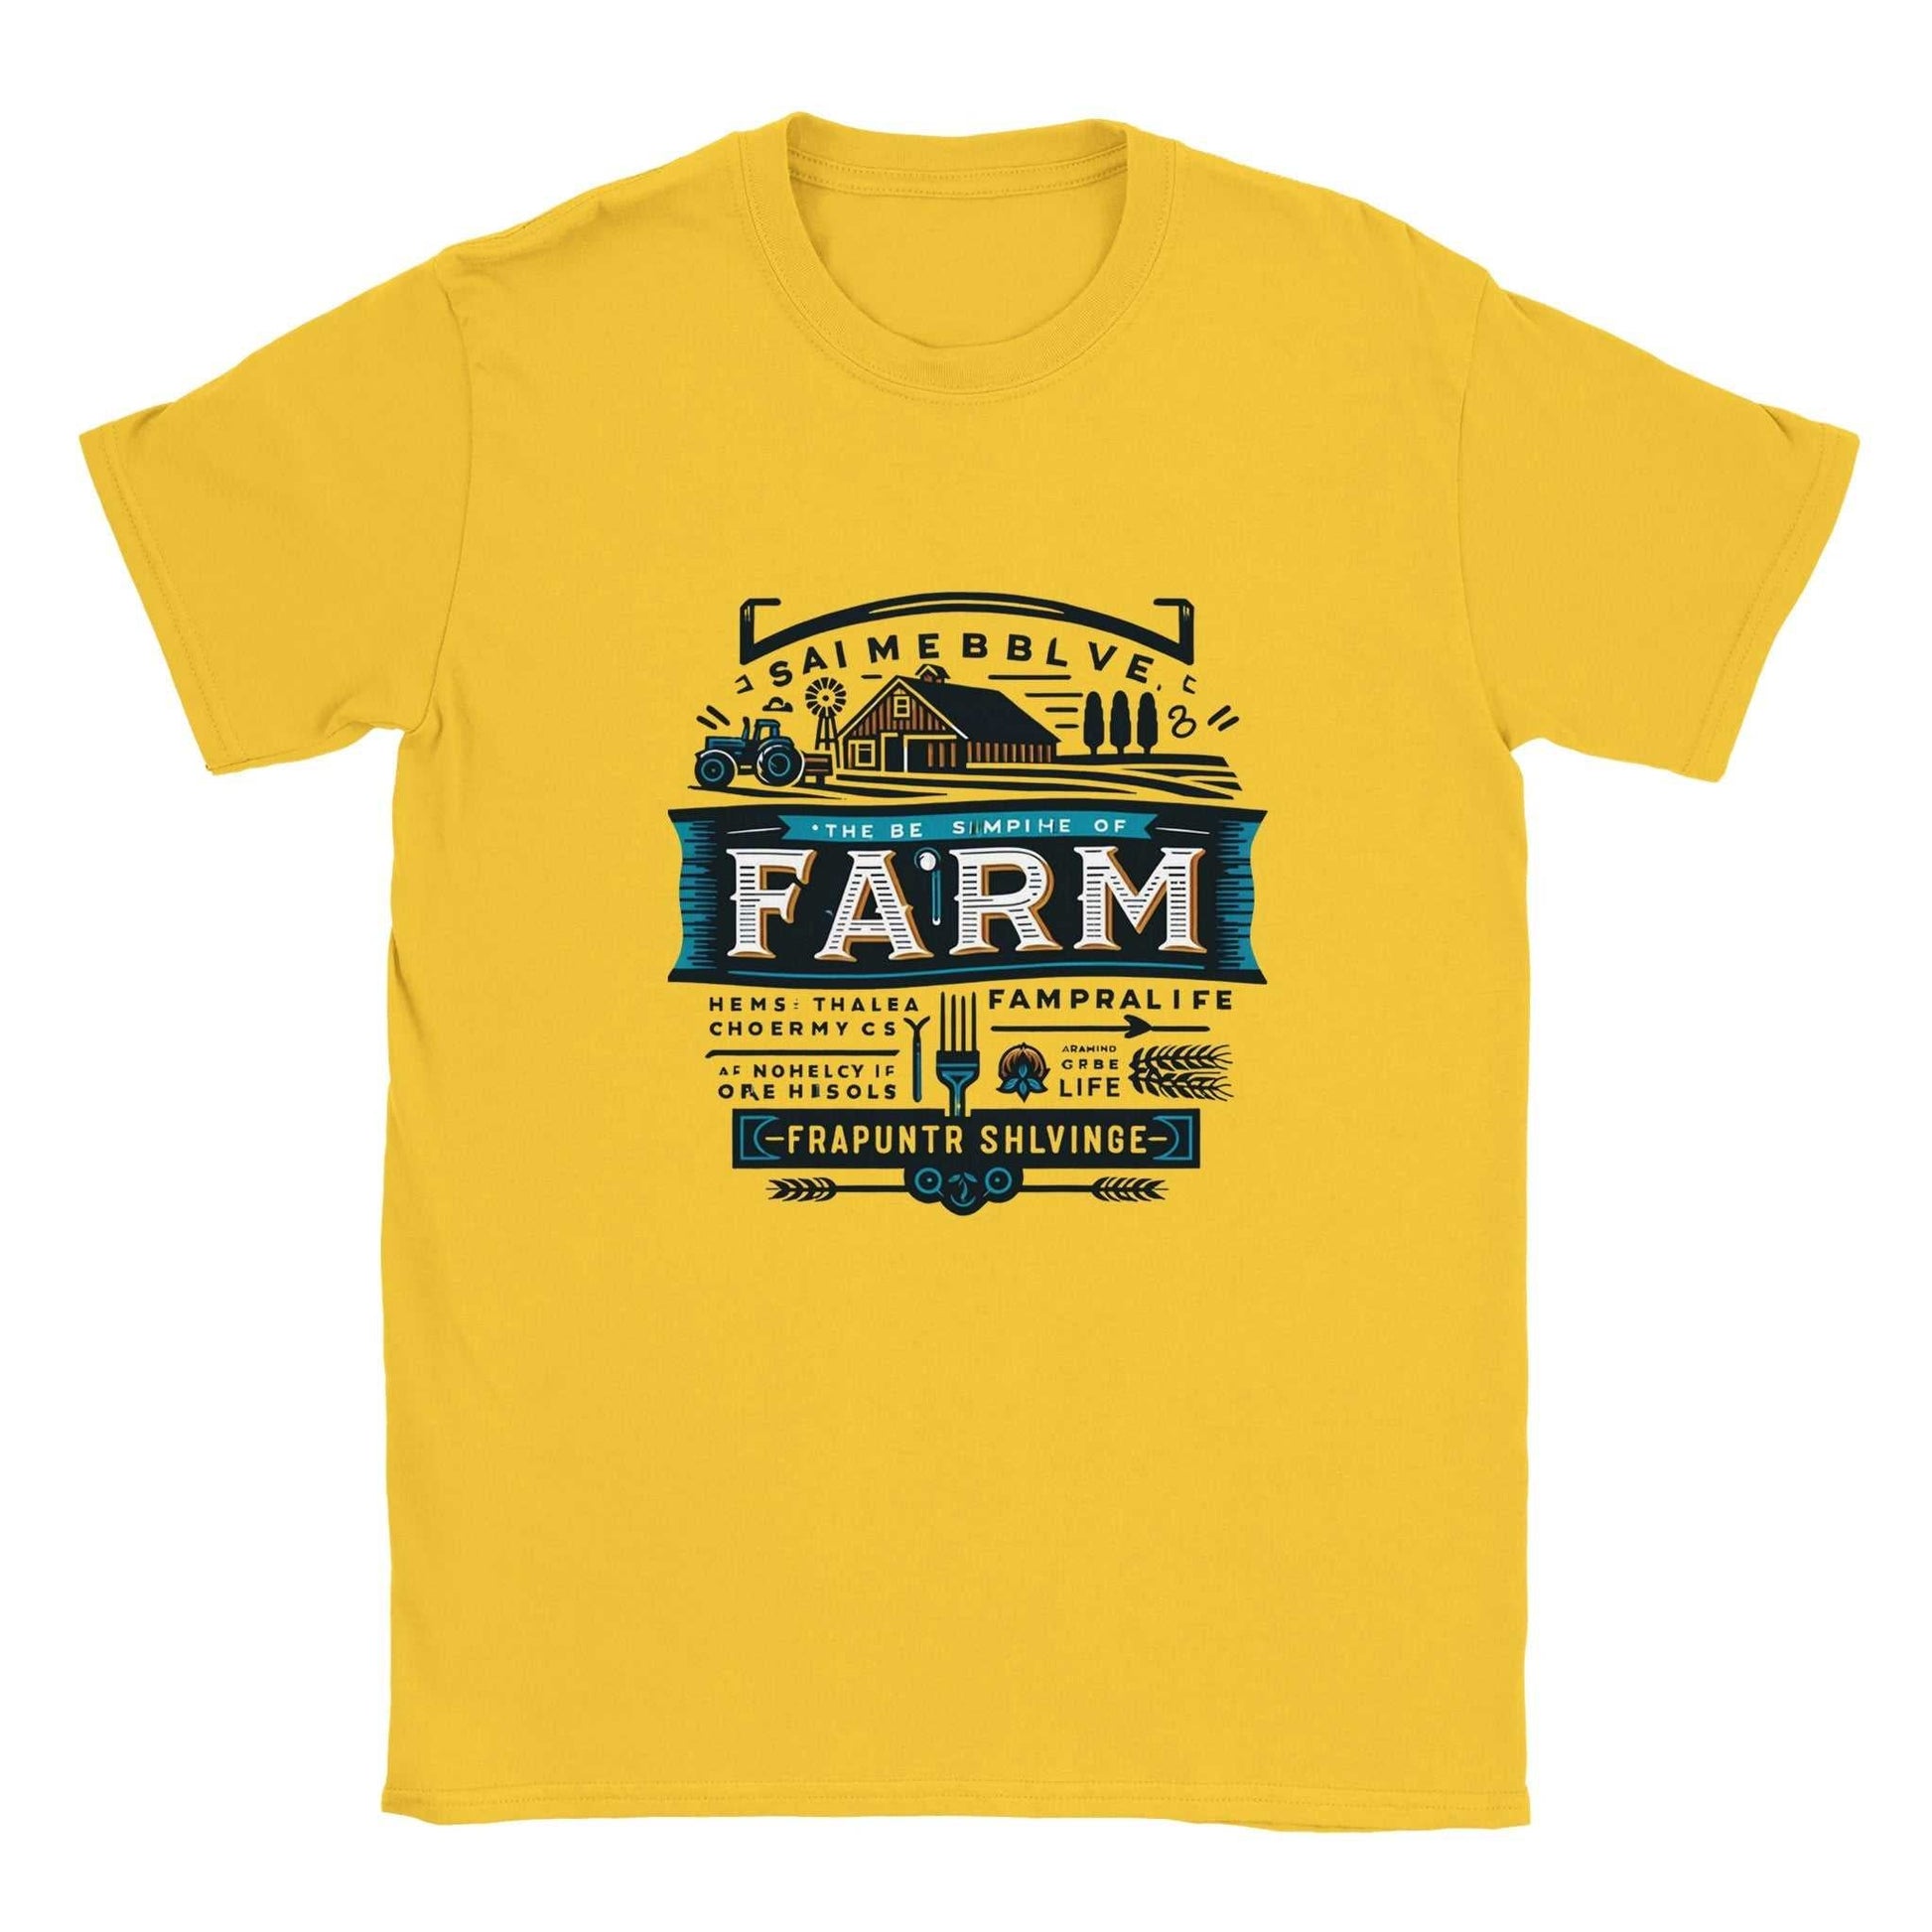 Classic  Crewneck "Rustic Charm" Farm T-Shirt - 100% soft, breathable cotton - BeinCart